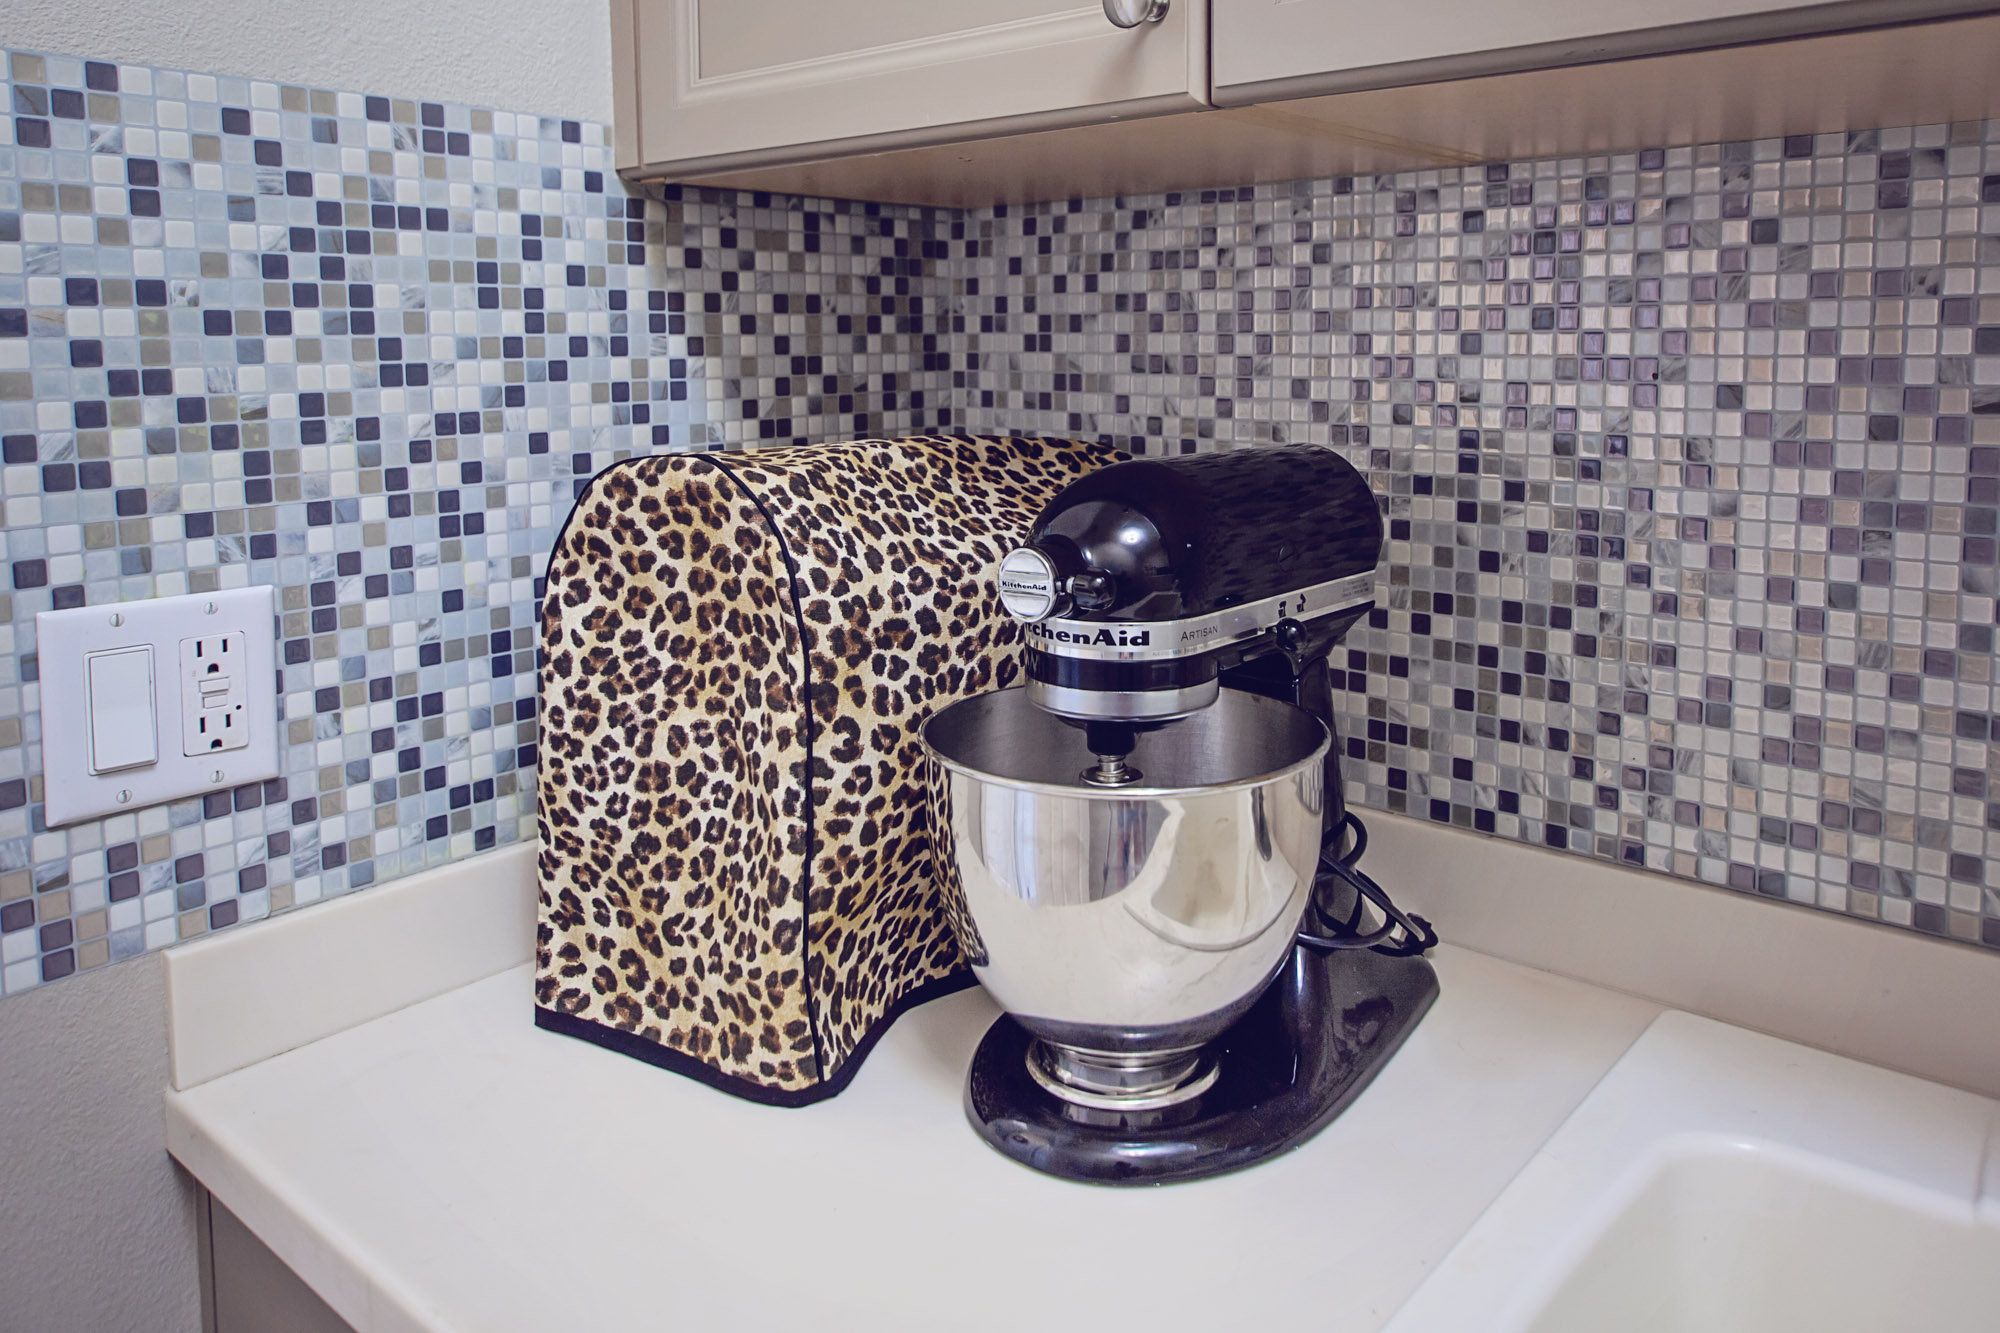  Kitchen Aid Mixer Cover Compatible with 6-8 Quarts Kitchen Aid/Hamilton  Stand Mixer/Tilt Head & Bowl Lift Model,Bird Print Mixer Cover Pioneer  Woman Kitchen Accessories,Kitchen Aid Mixer Accessories: Home & Kitchen